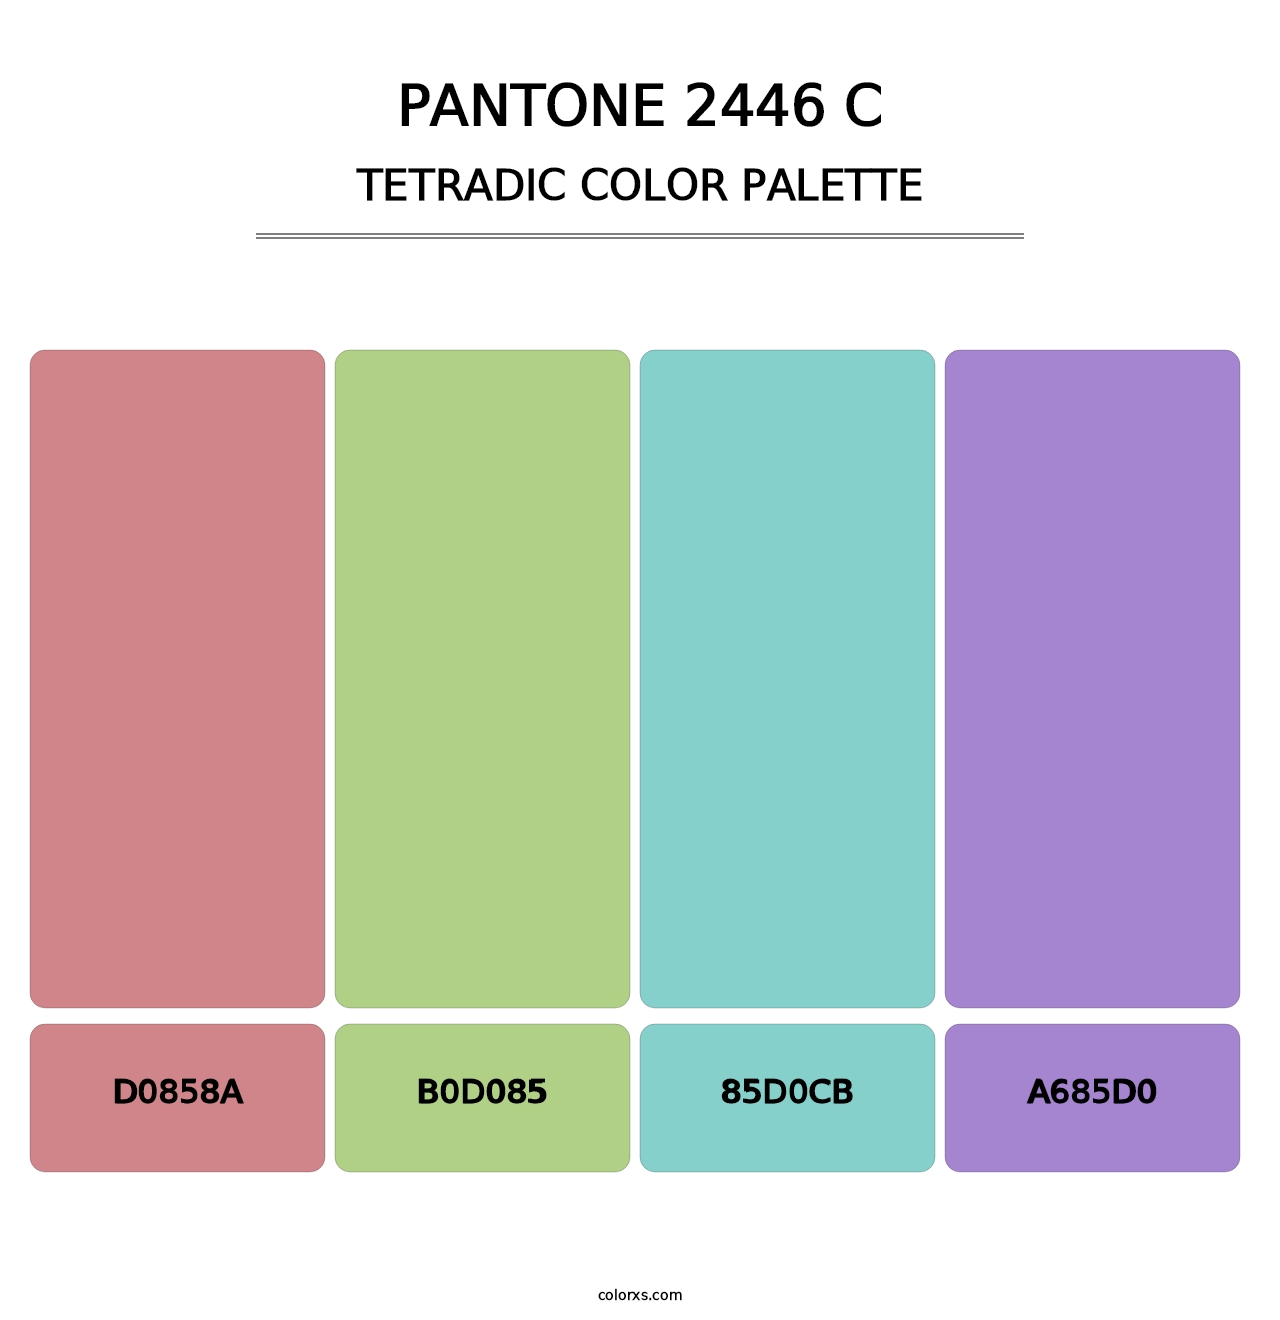 PANTONE 2446 C - Tetradic Color Palette